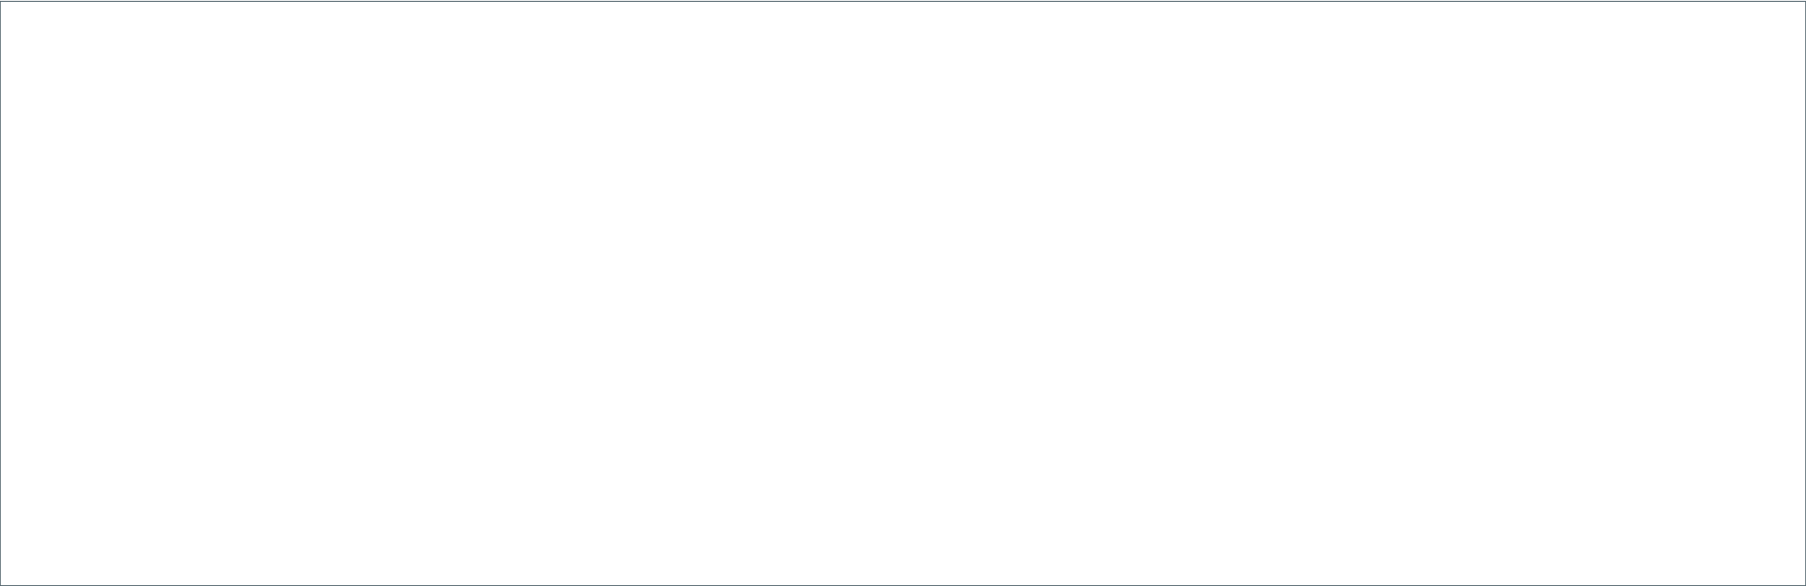 Dolomiti-Smart-Holiday.png